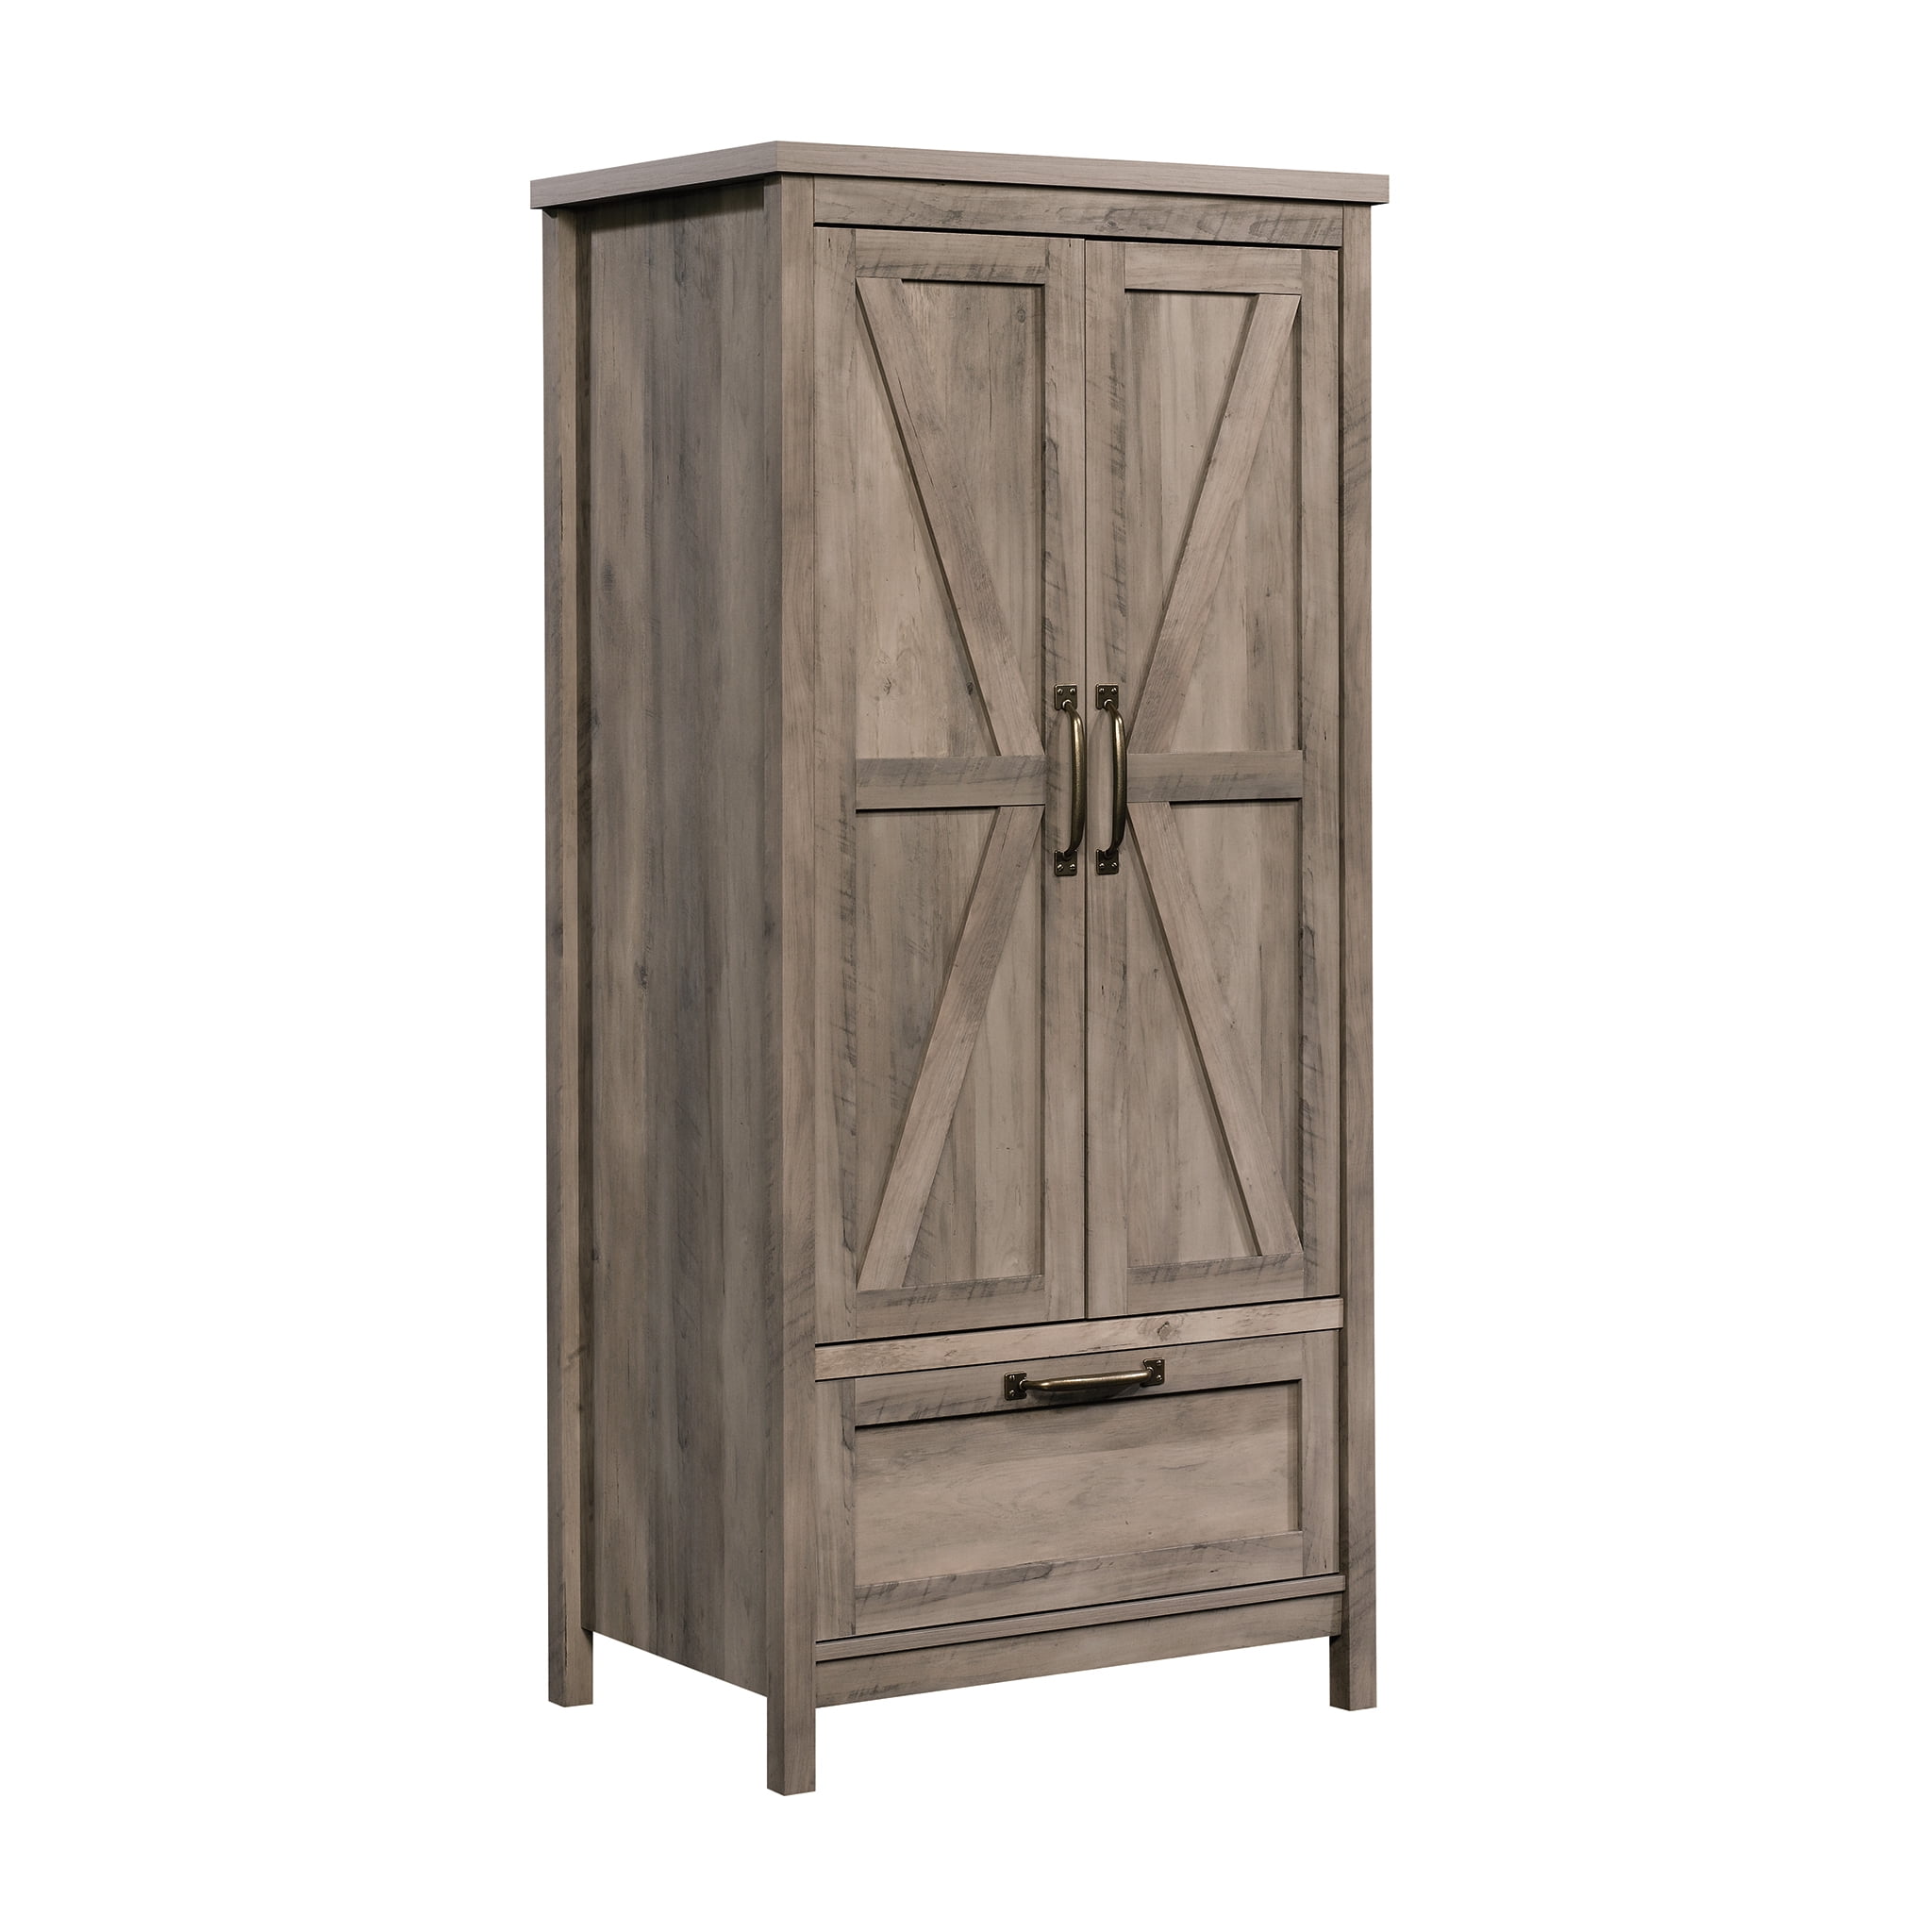 Wood Wardrobe Clothes Storage Cabinet Closet Rustic Farmhouse Bedroom Furniture 